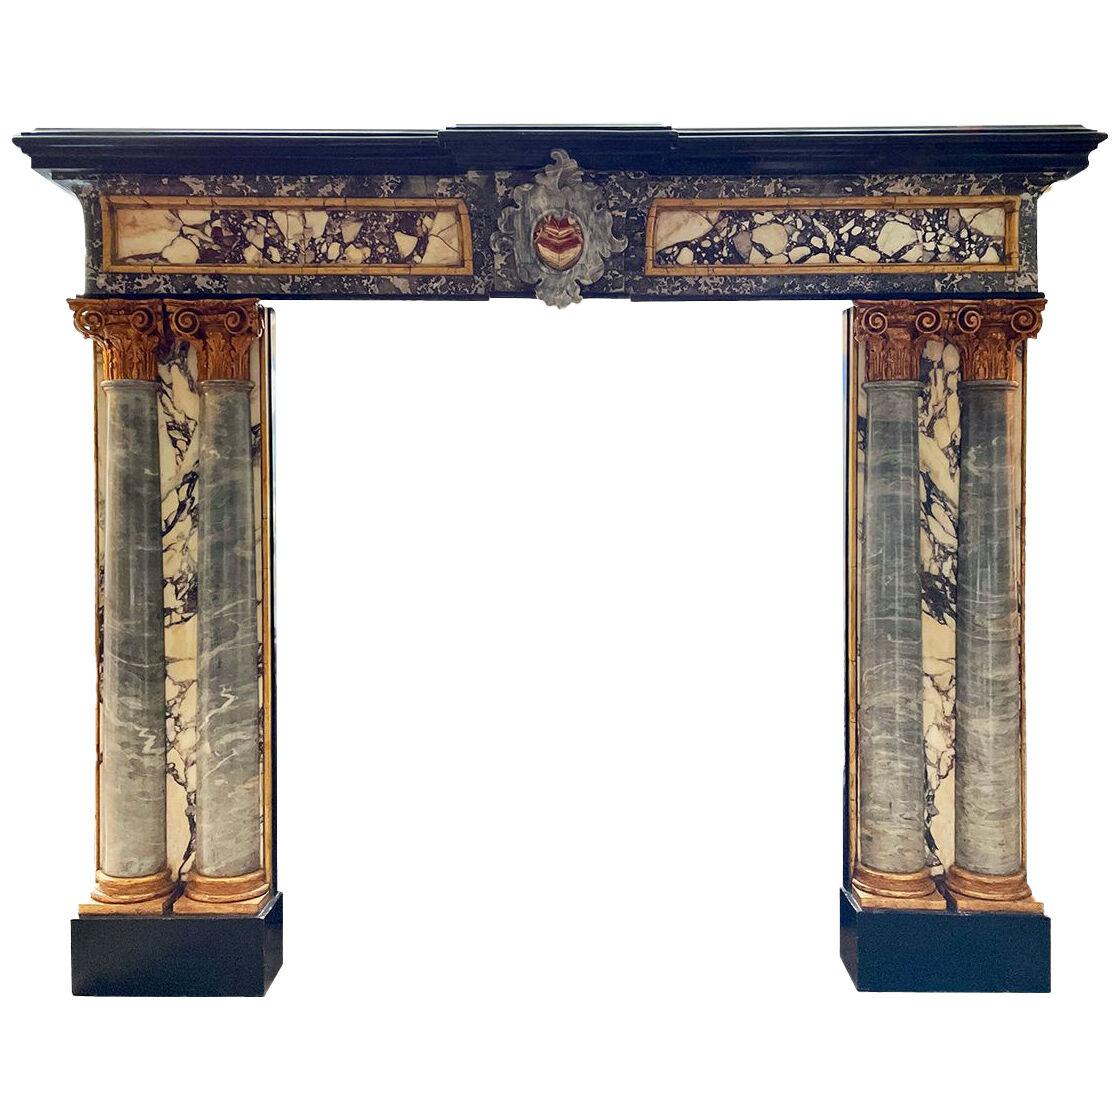 An Antique Italian Renaissance Style Specimen Marble Fireplace Mantel